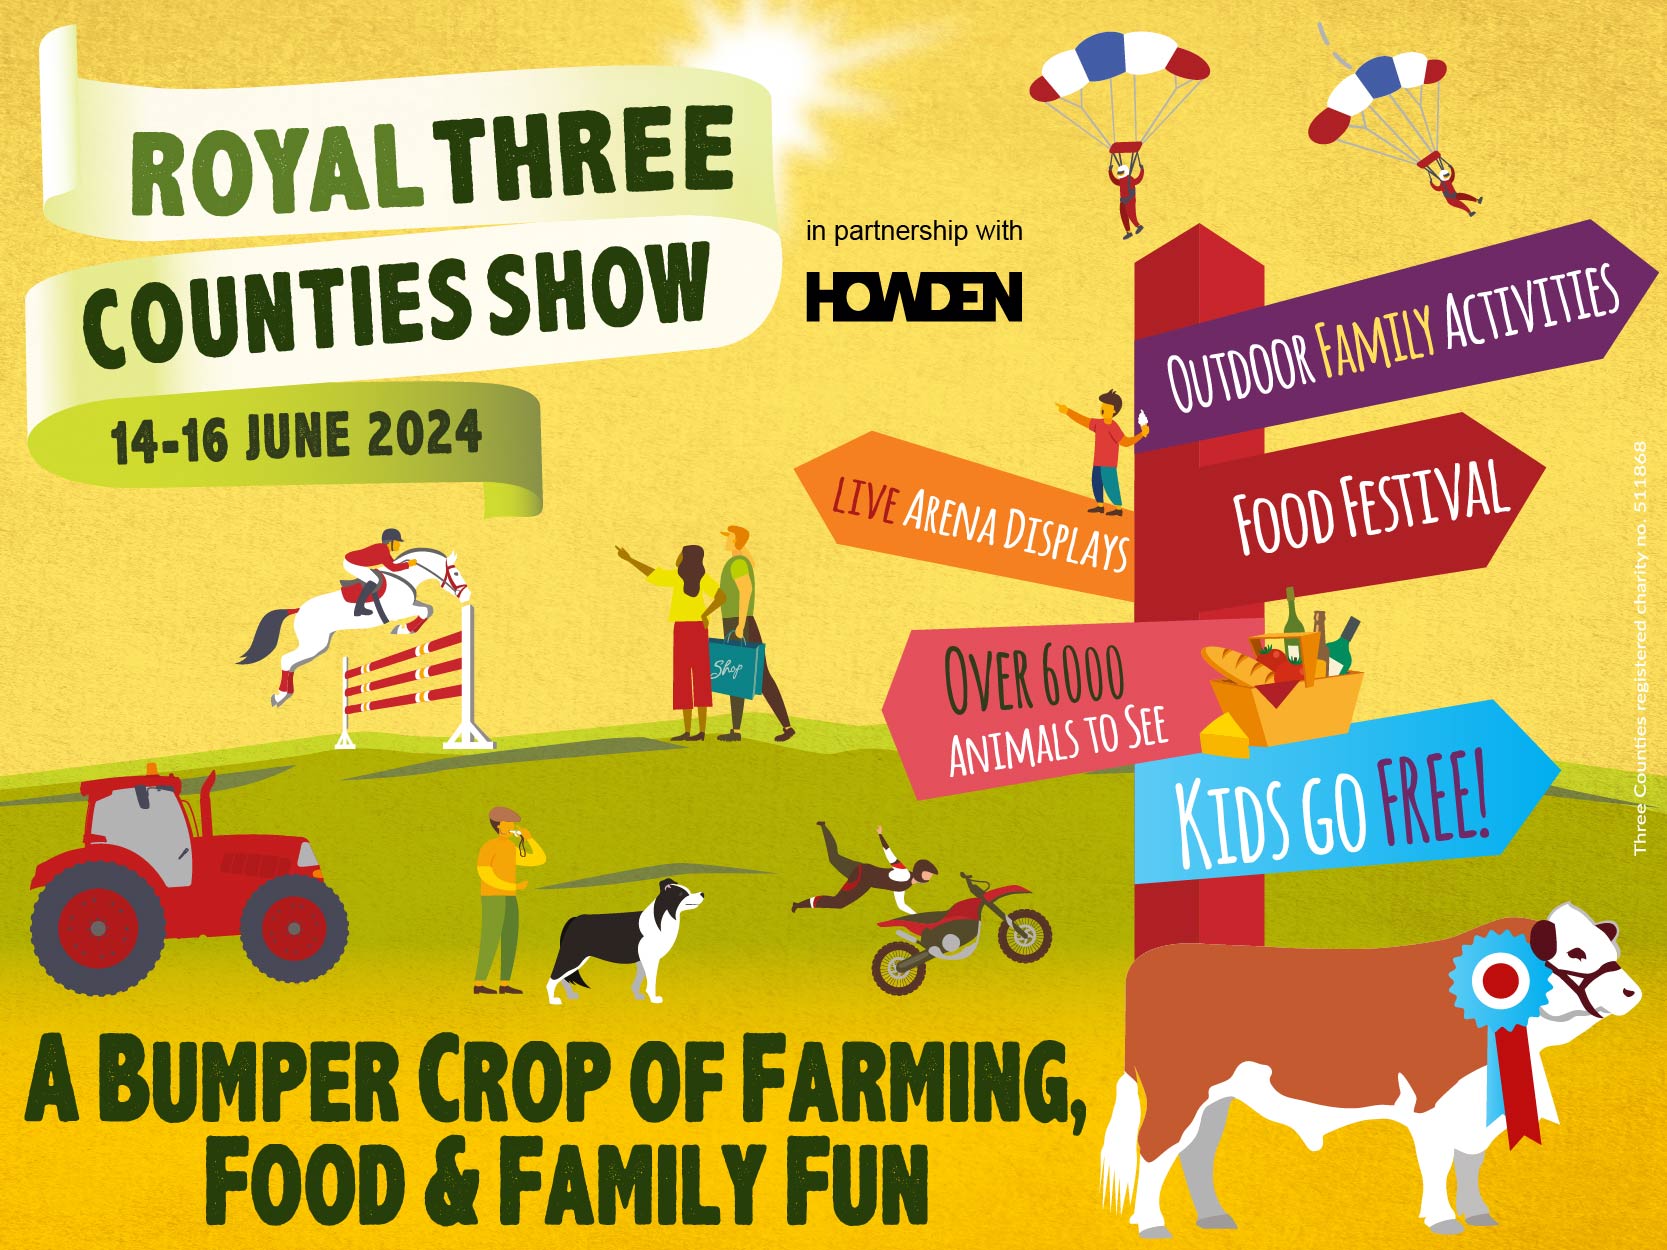 Royal Three Counties Show 2024